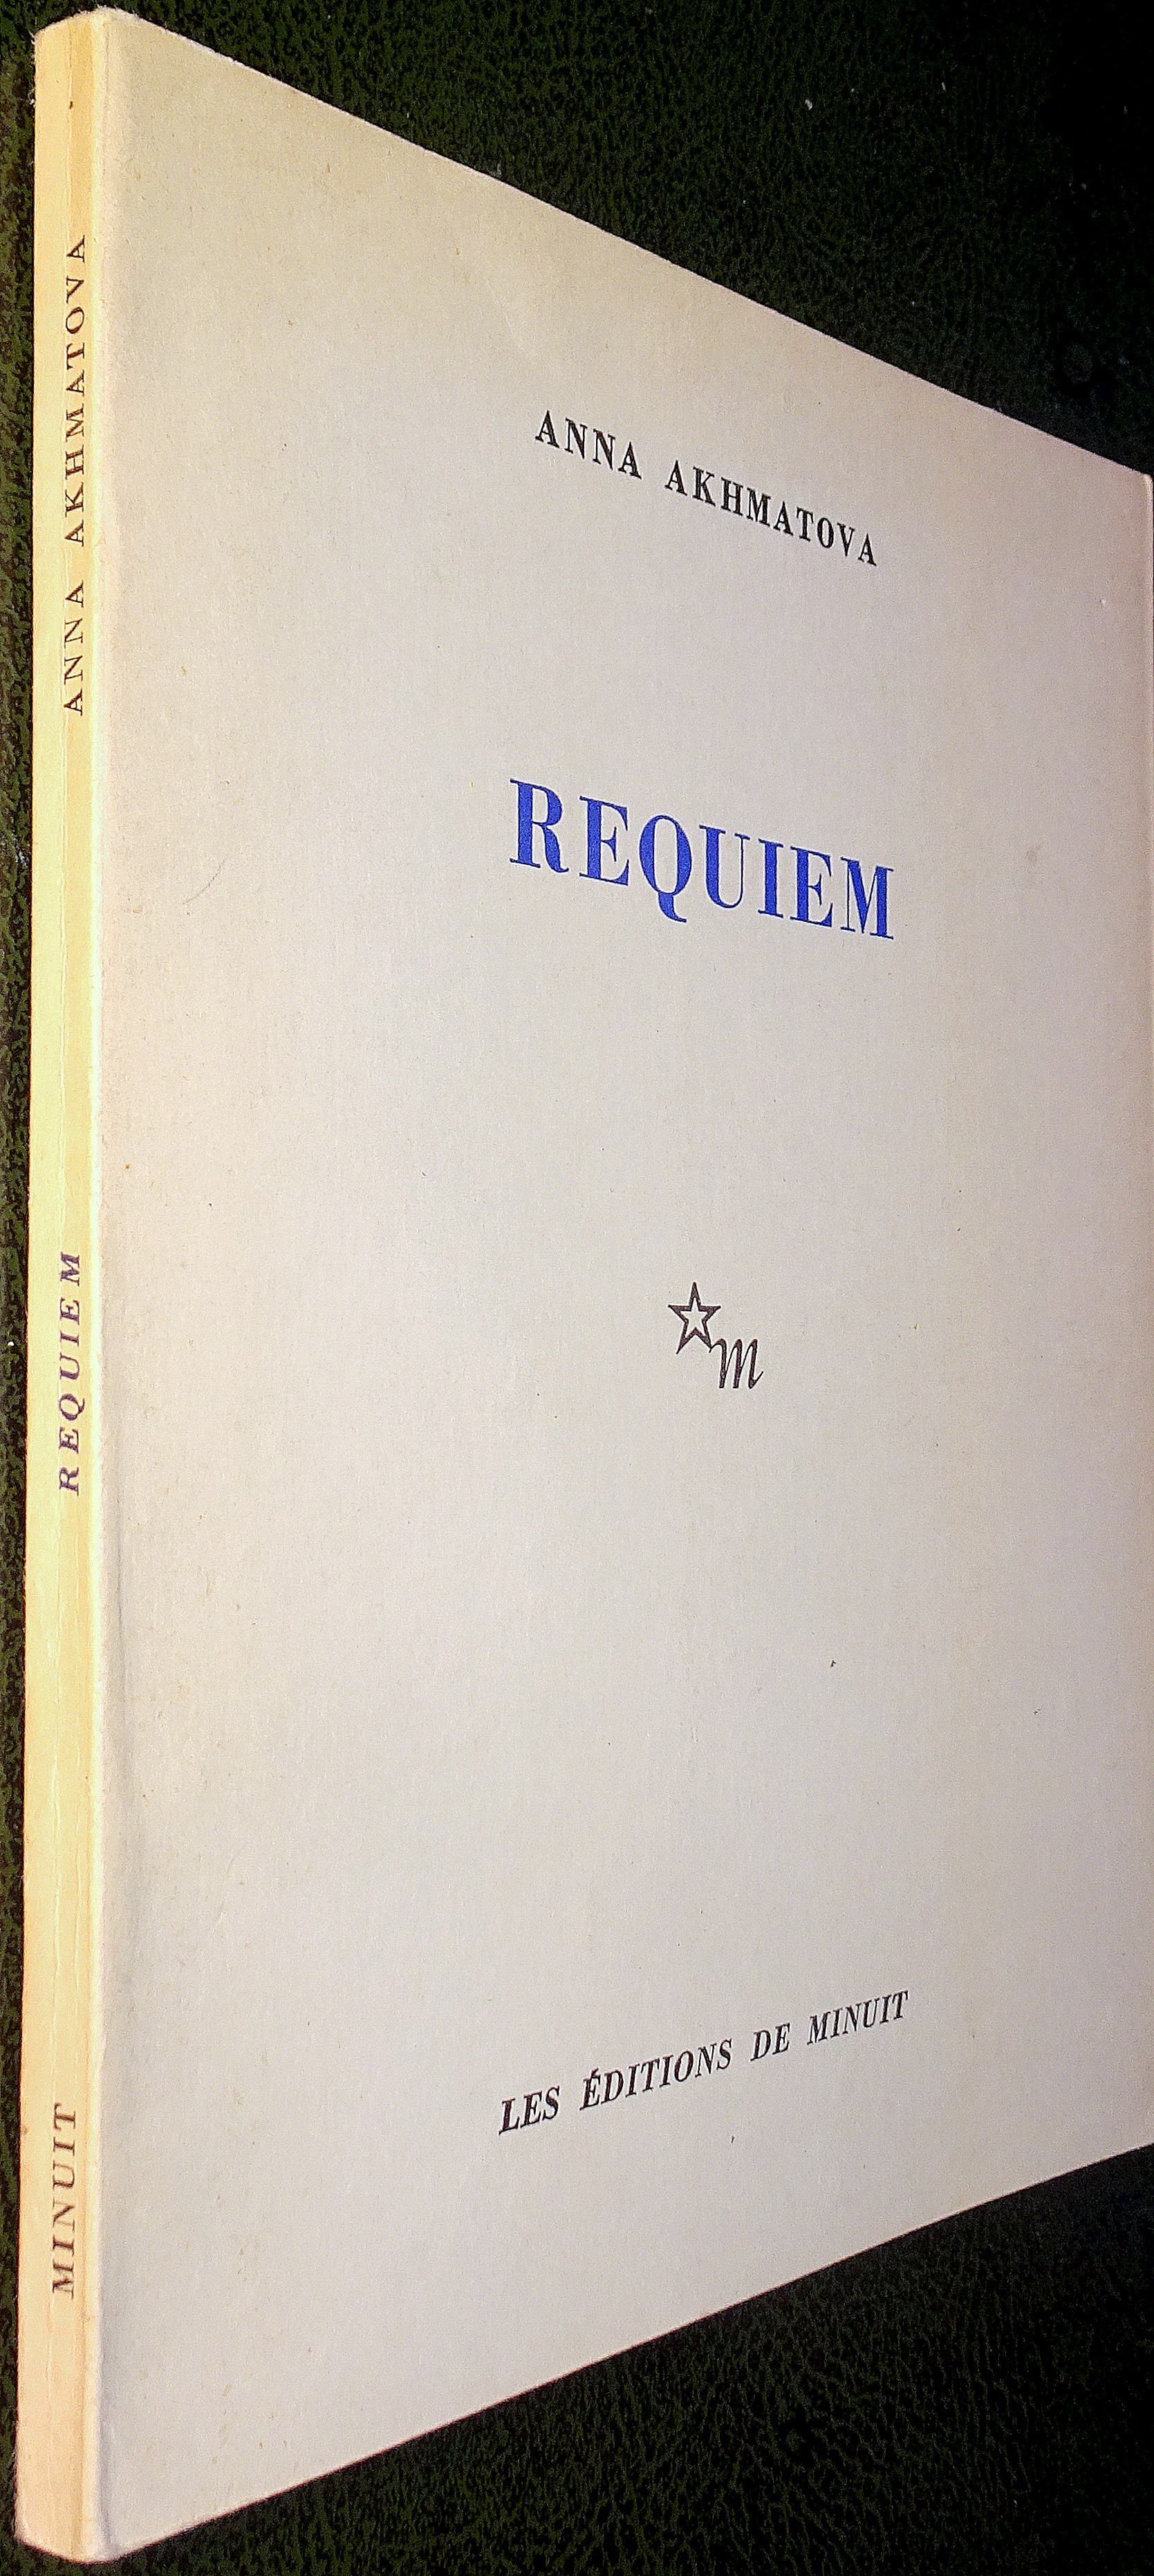 Requiem by Anna Akhmatova